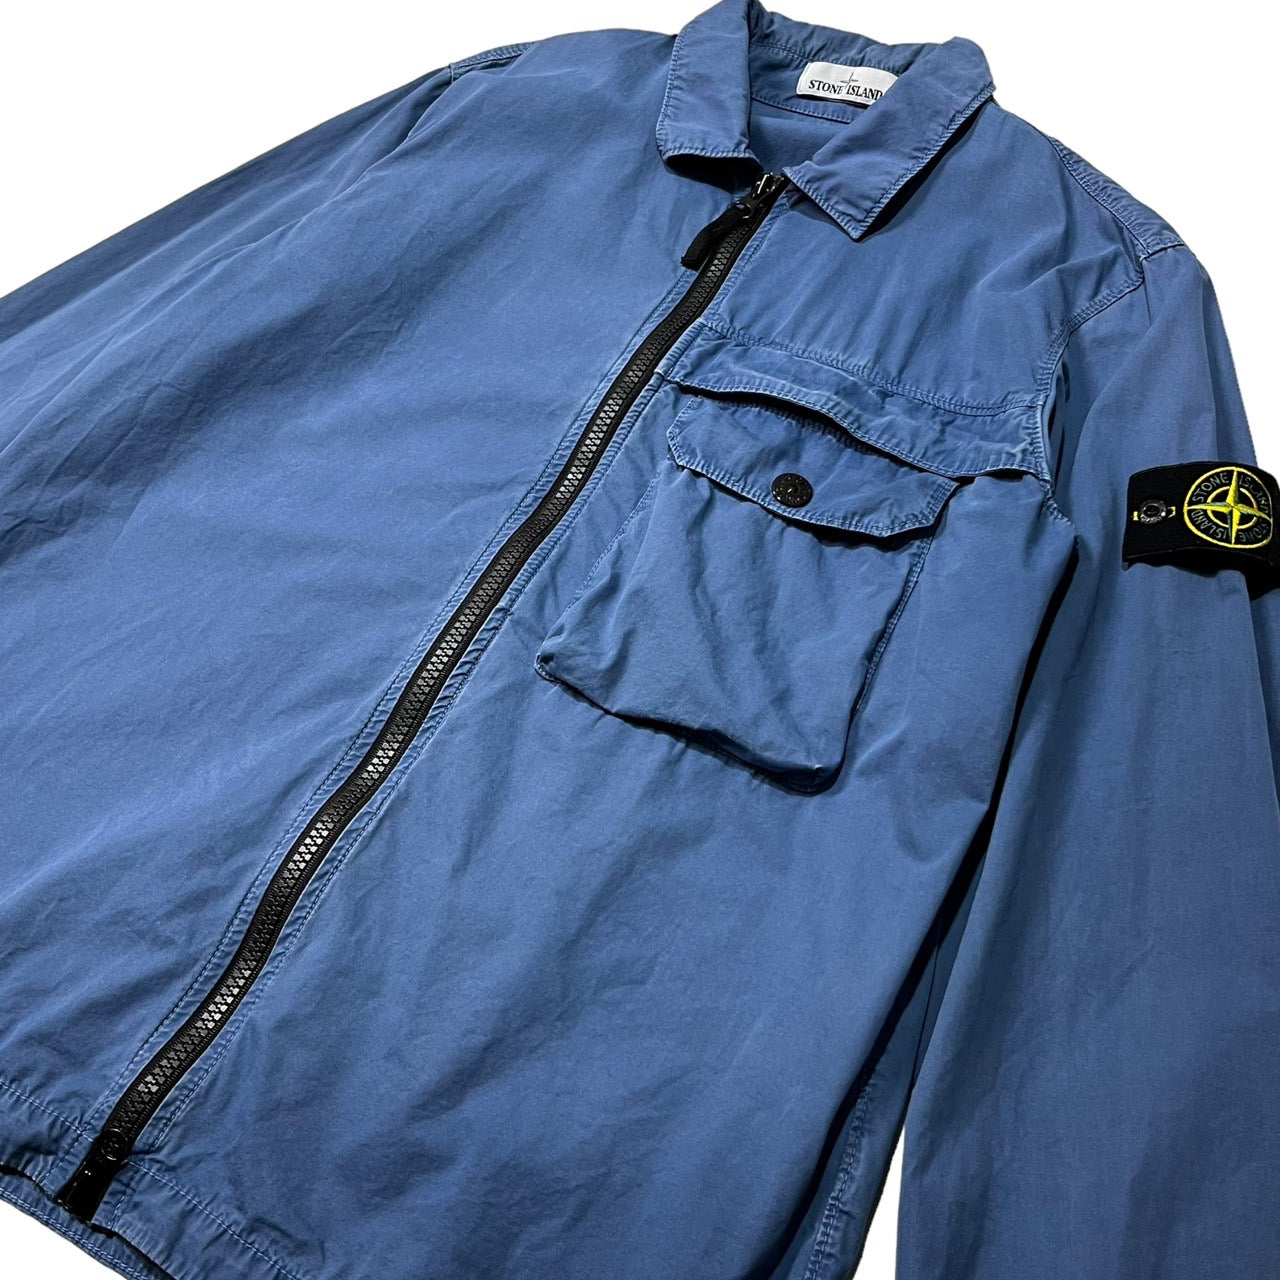 STONE ISLAND(ストーンアイランド) 20AW garment-dyed zip-up jacket 